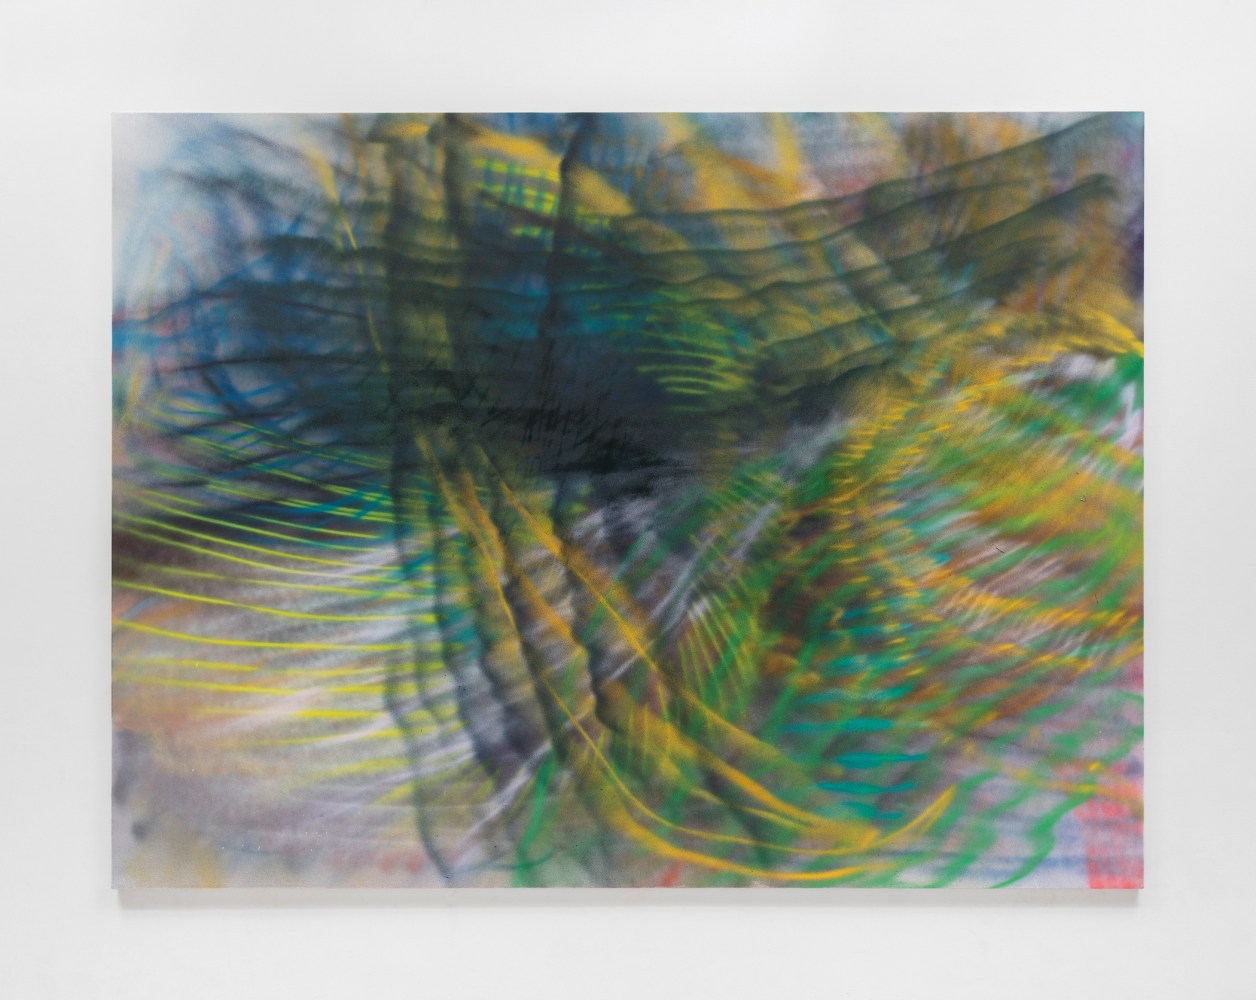 Andrea Marie&amp;nbsp;Breiling
The Mire, 2021
aerosol spray on canvas
72 1/2 x 96 in (184.2 x 243.8 cm)
AMB091